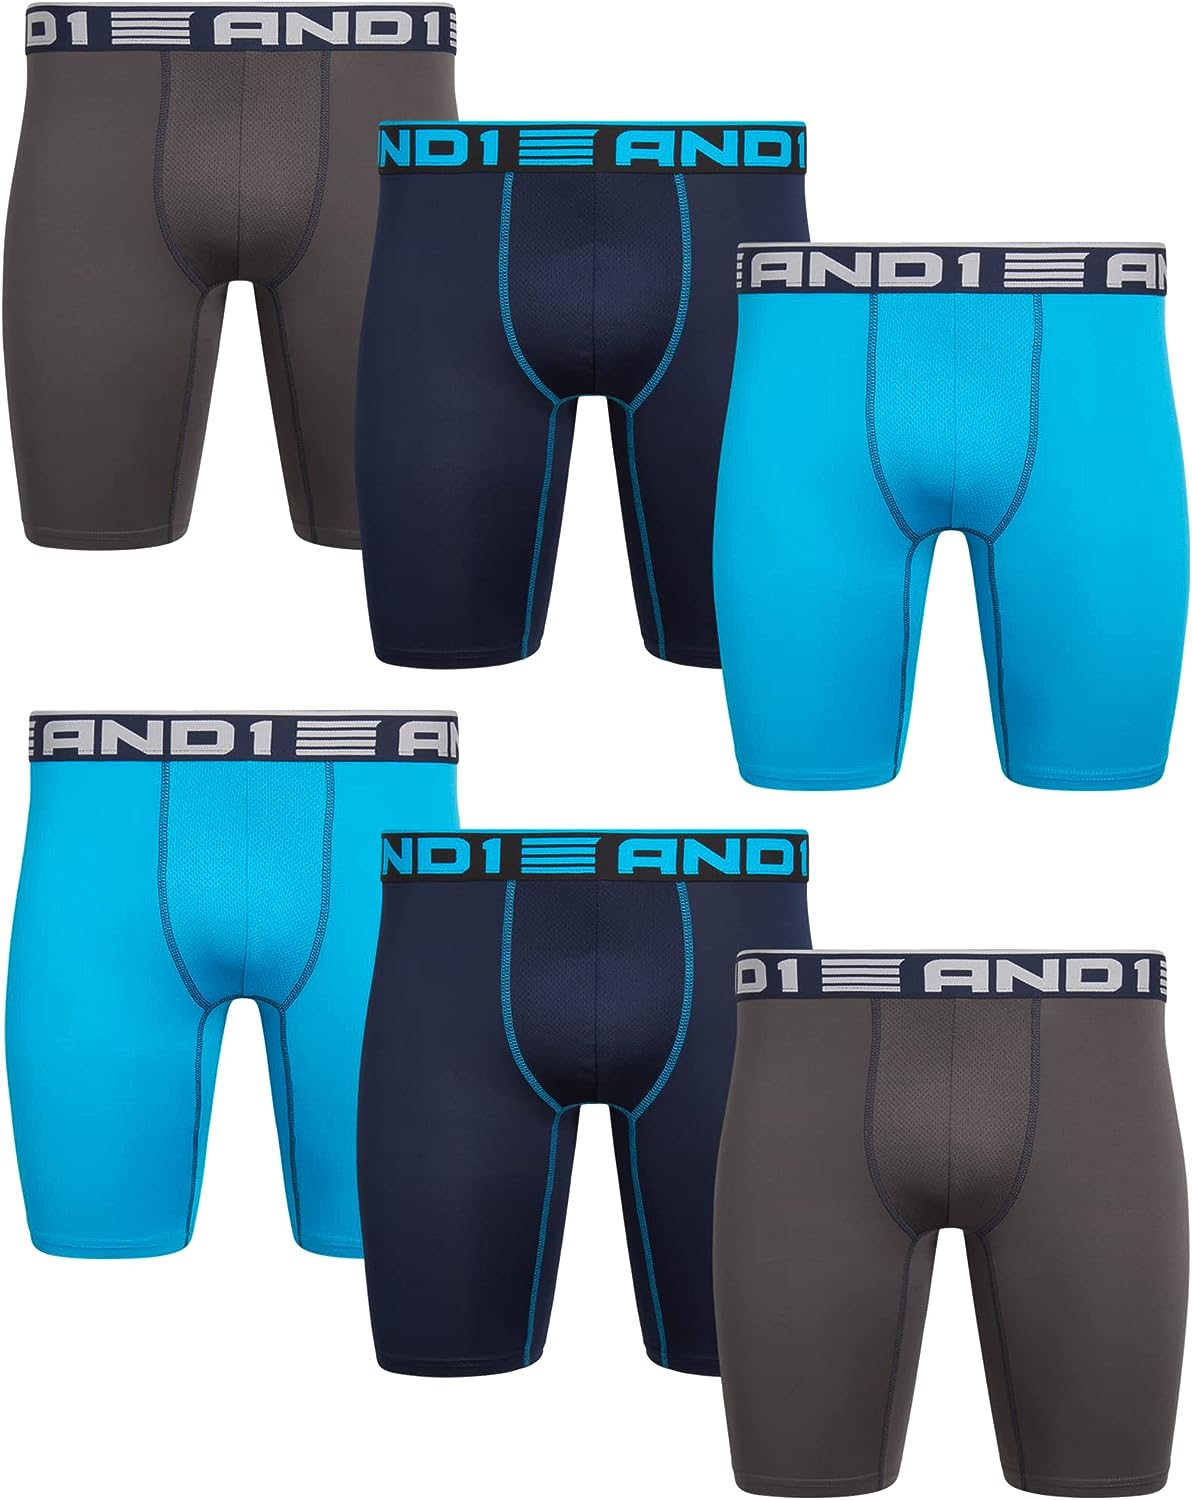 AND1 Men's Underwear – 6 Pack Long Leg Performance Compression Boxer Briefs  (S-3XL)